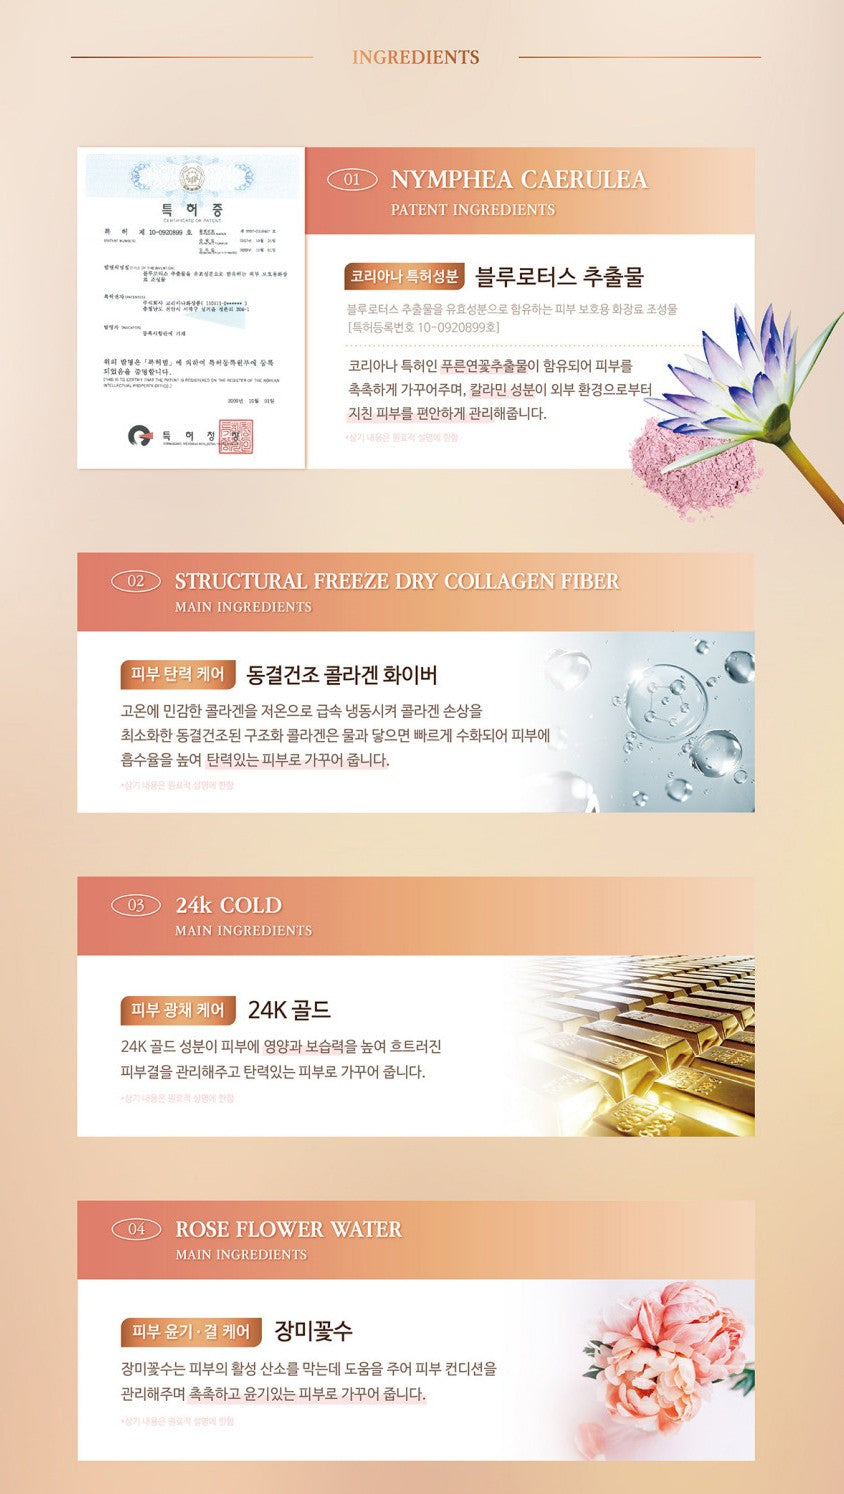 Coreana ORTHIA Perfect Collagen 24K Rose Gold Essence White Tone Up Cream Sensitive Skin SPF50+PA++++